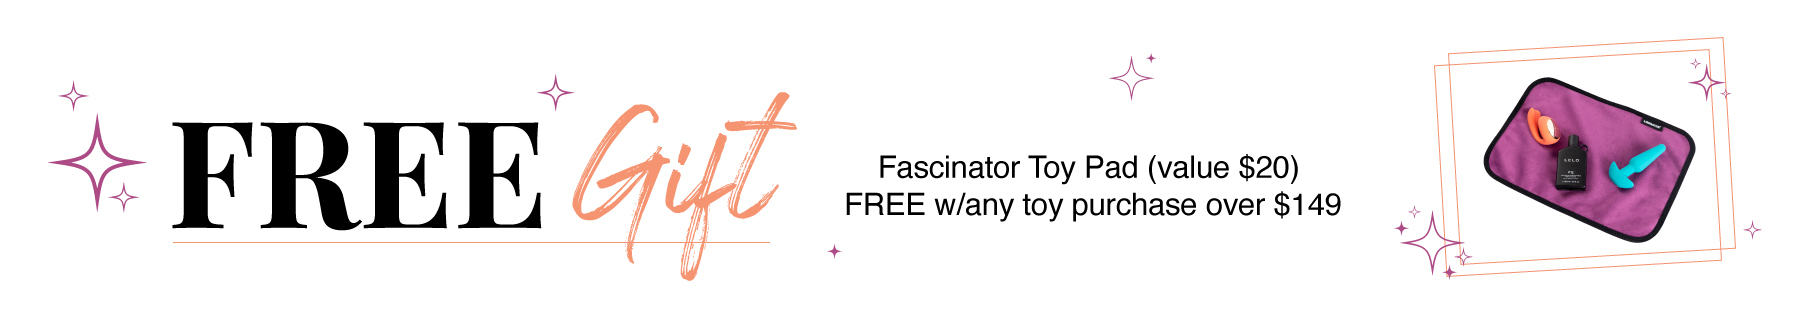 FREE Gift Fascinator Toy Pad